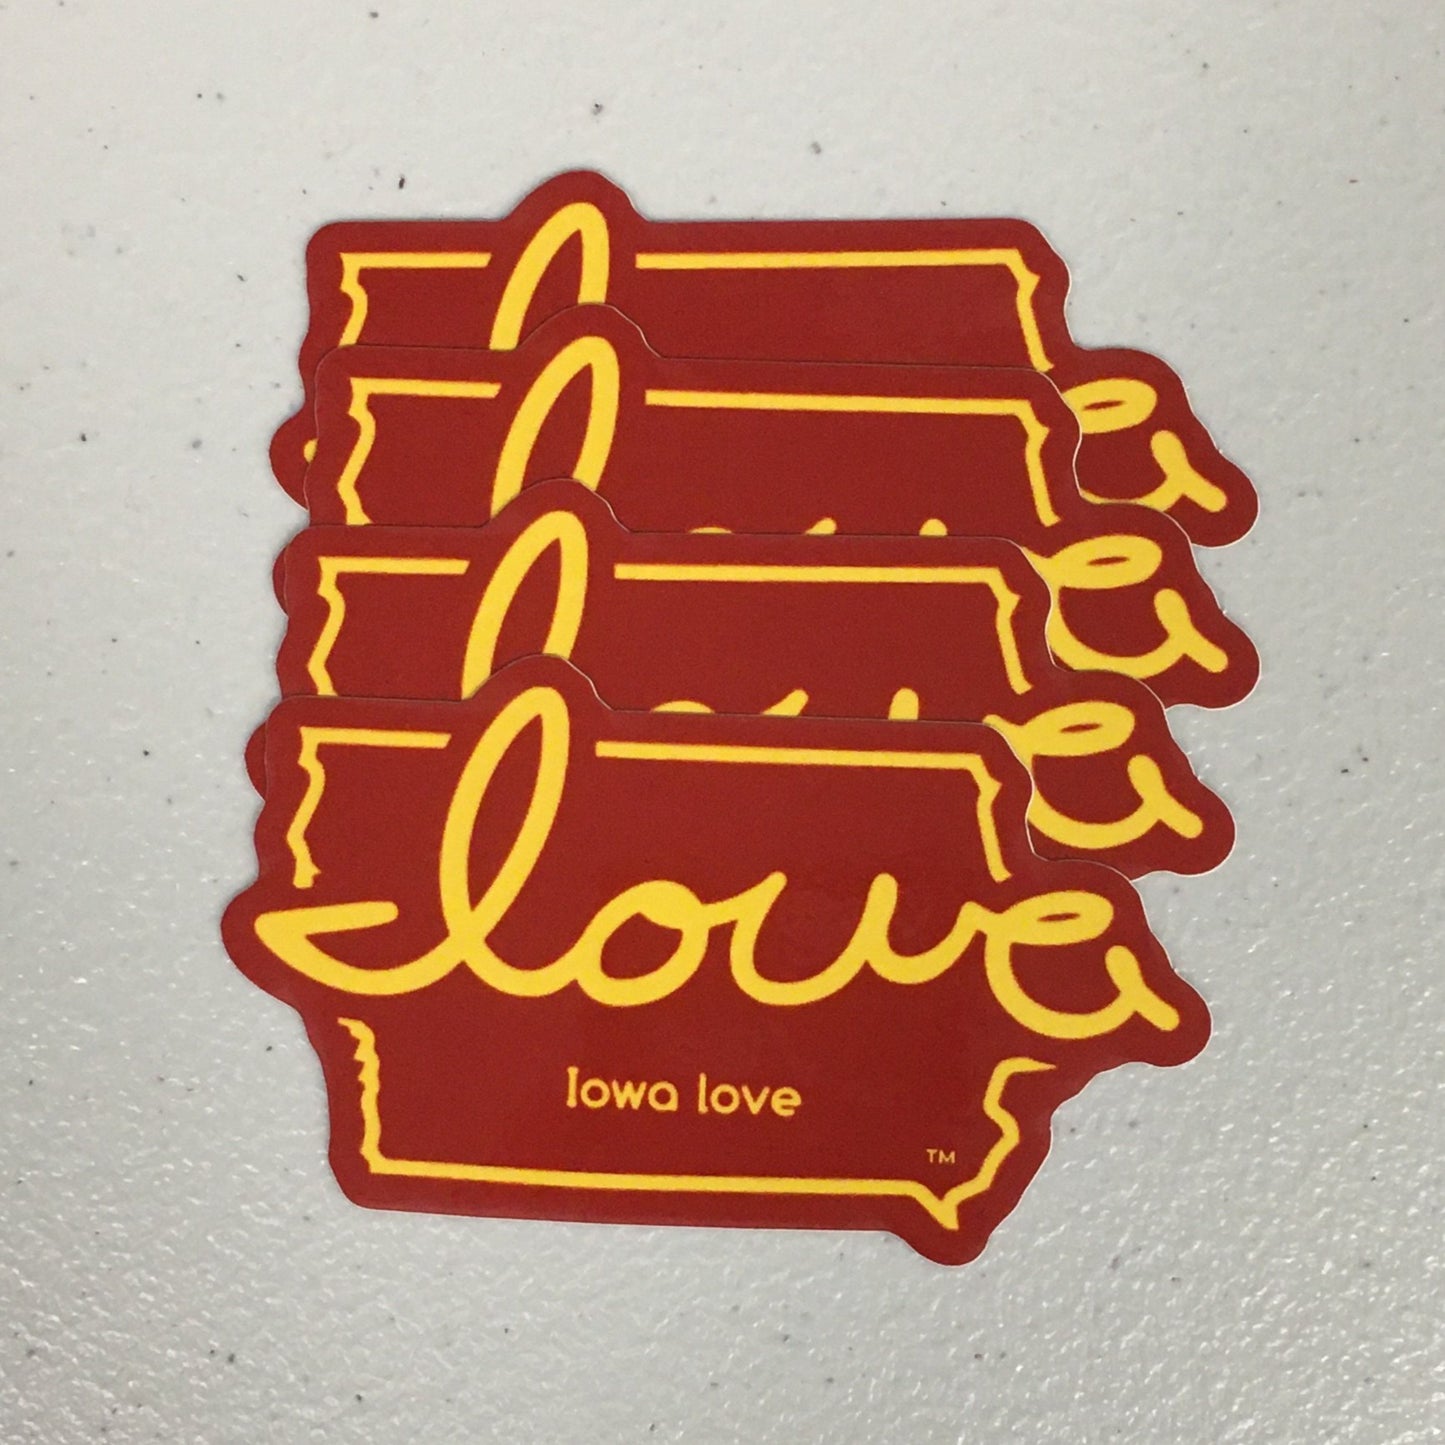 "Iowa love" Cardinal & Gold Sticker